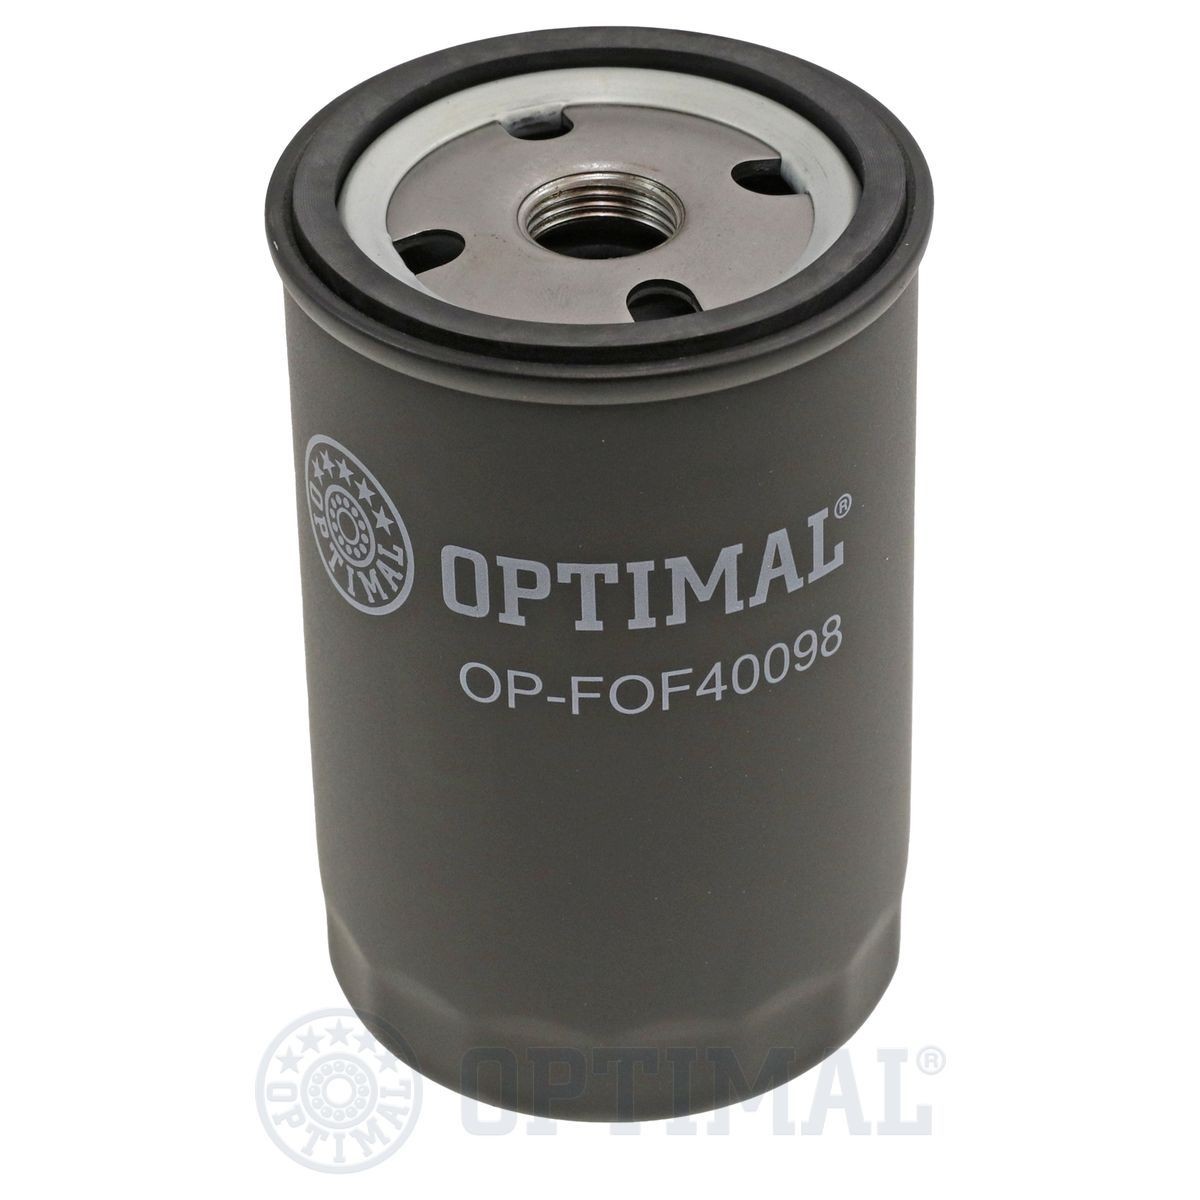 OPTIMAL OP-FOF40098 Oil filter E5120700509